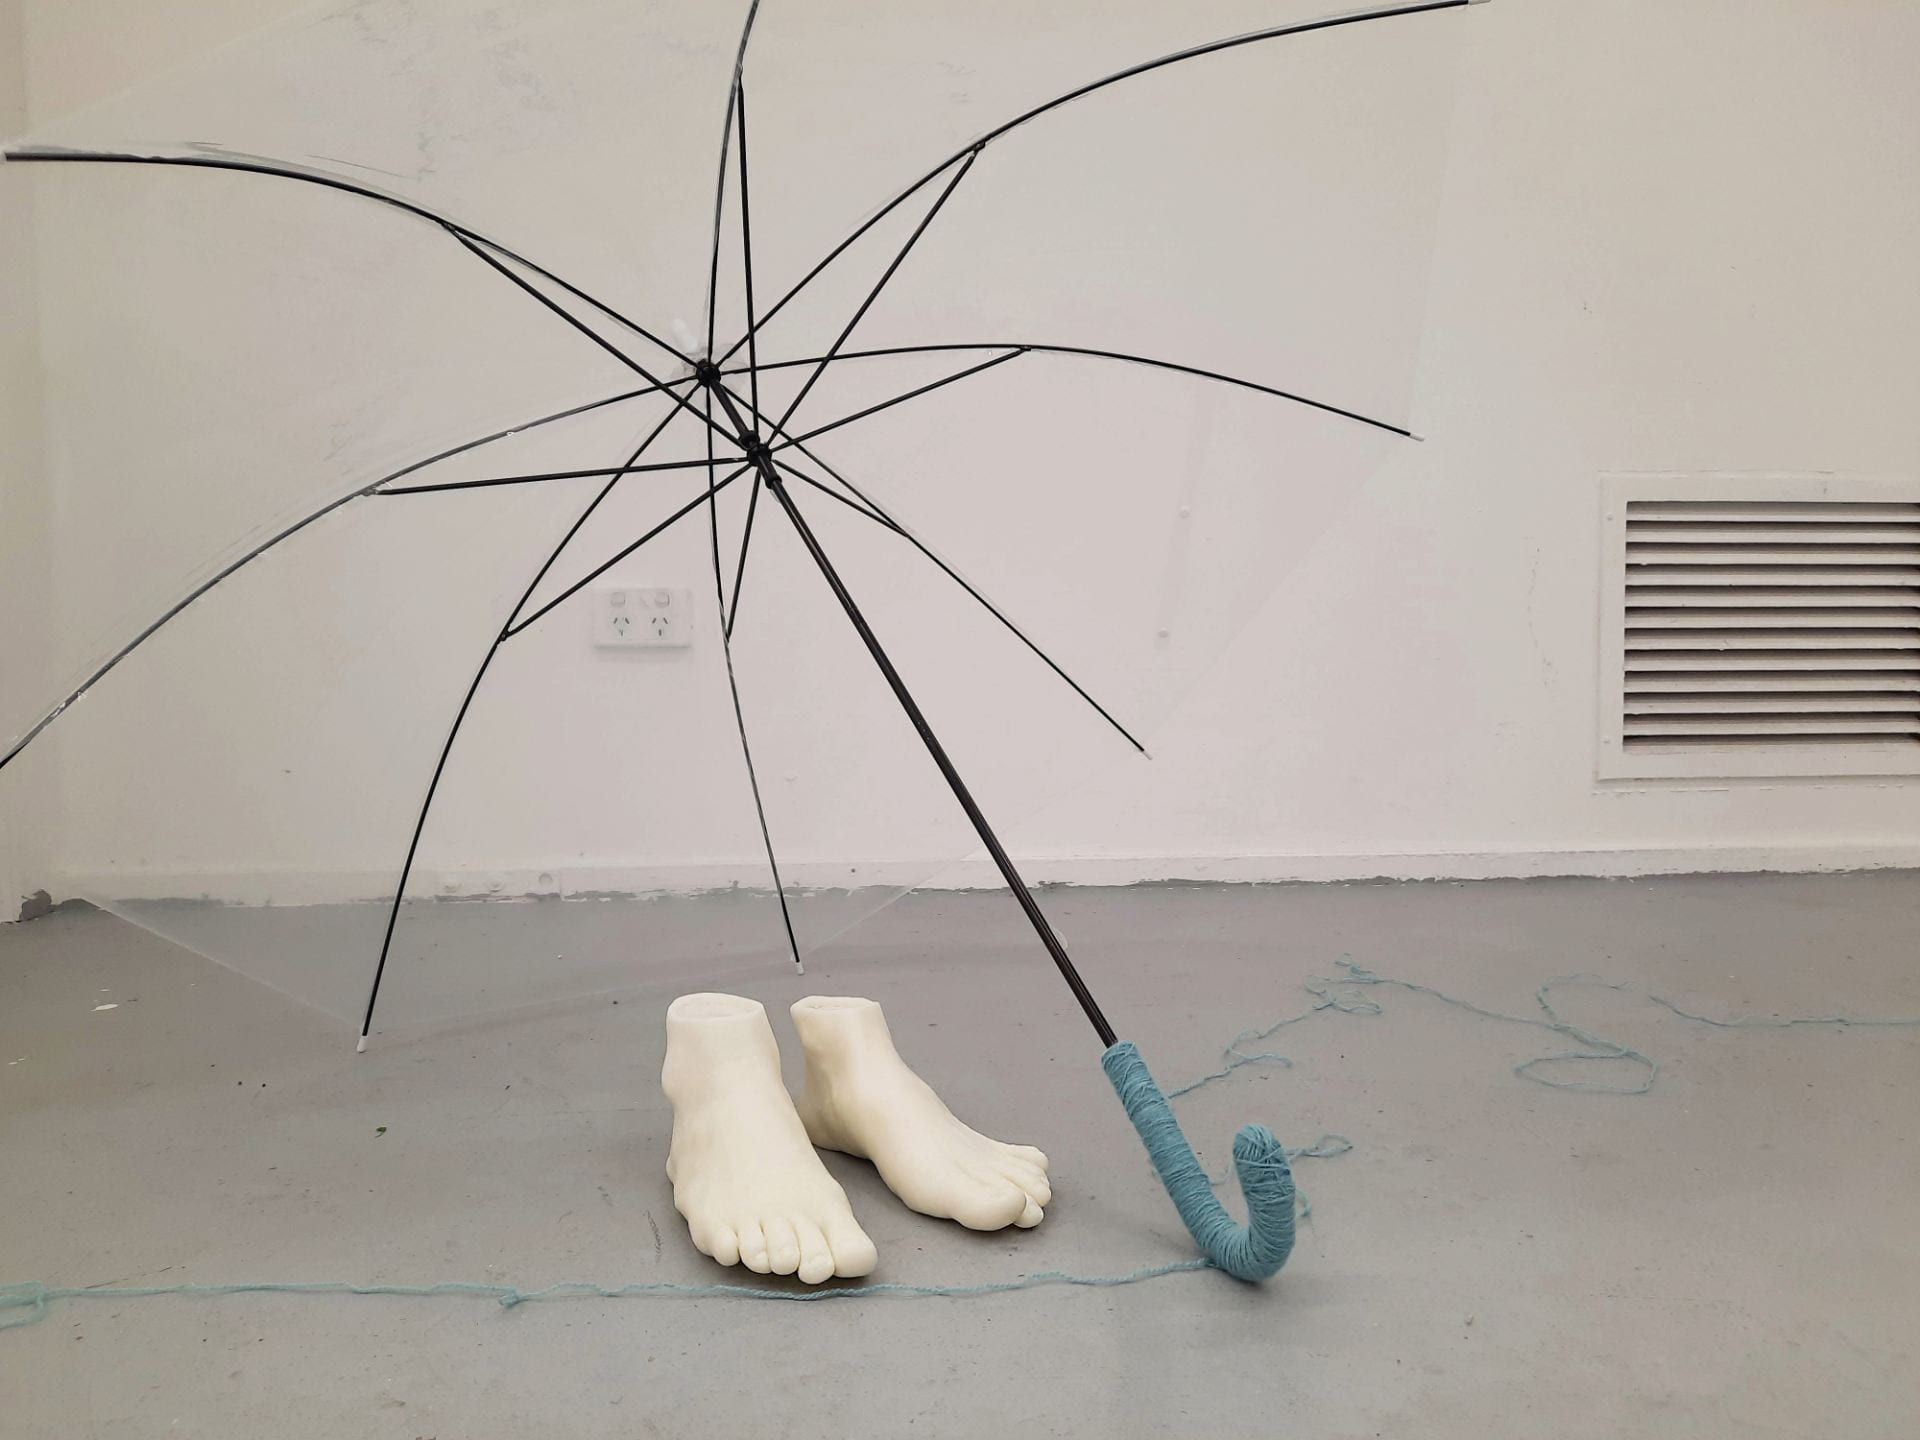 wax feet under the umbrella